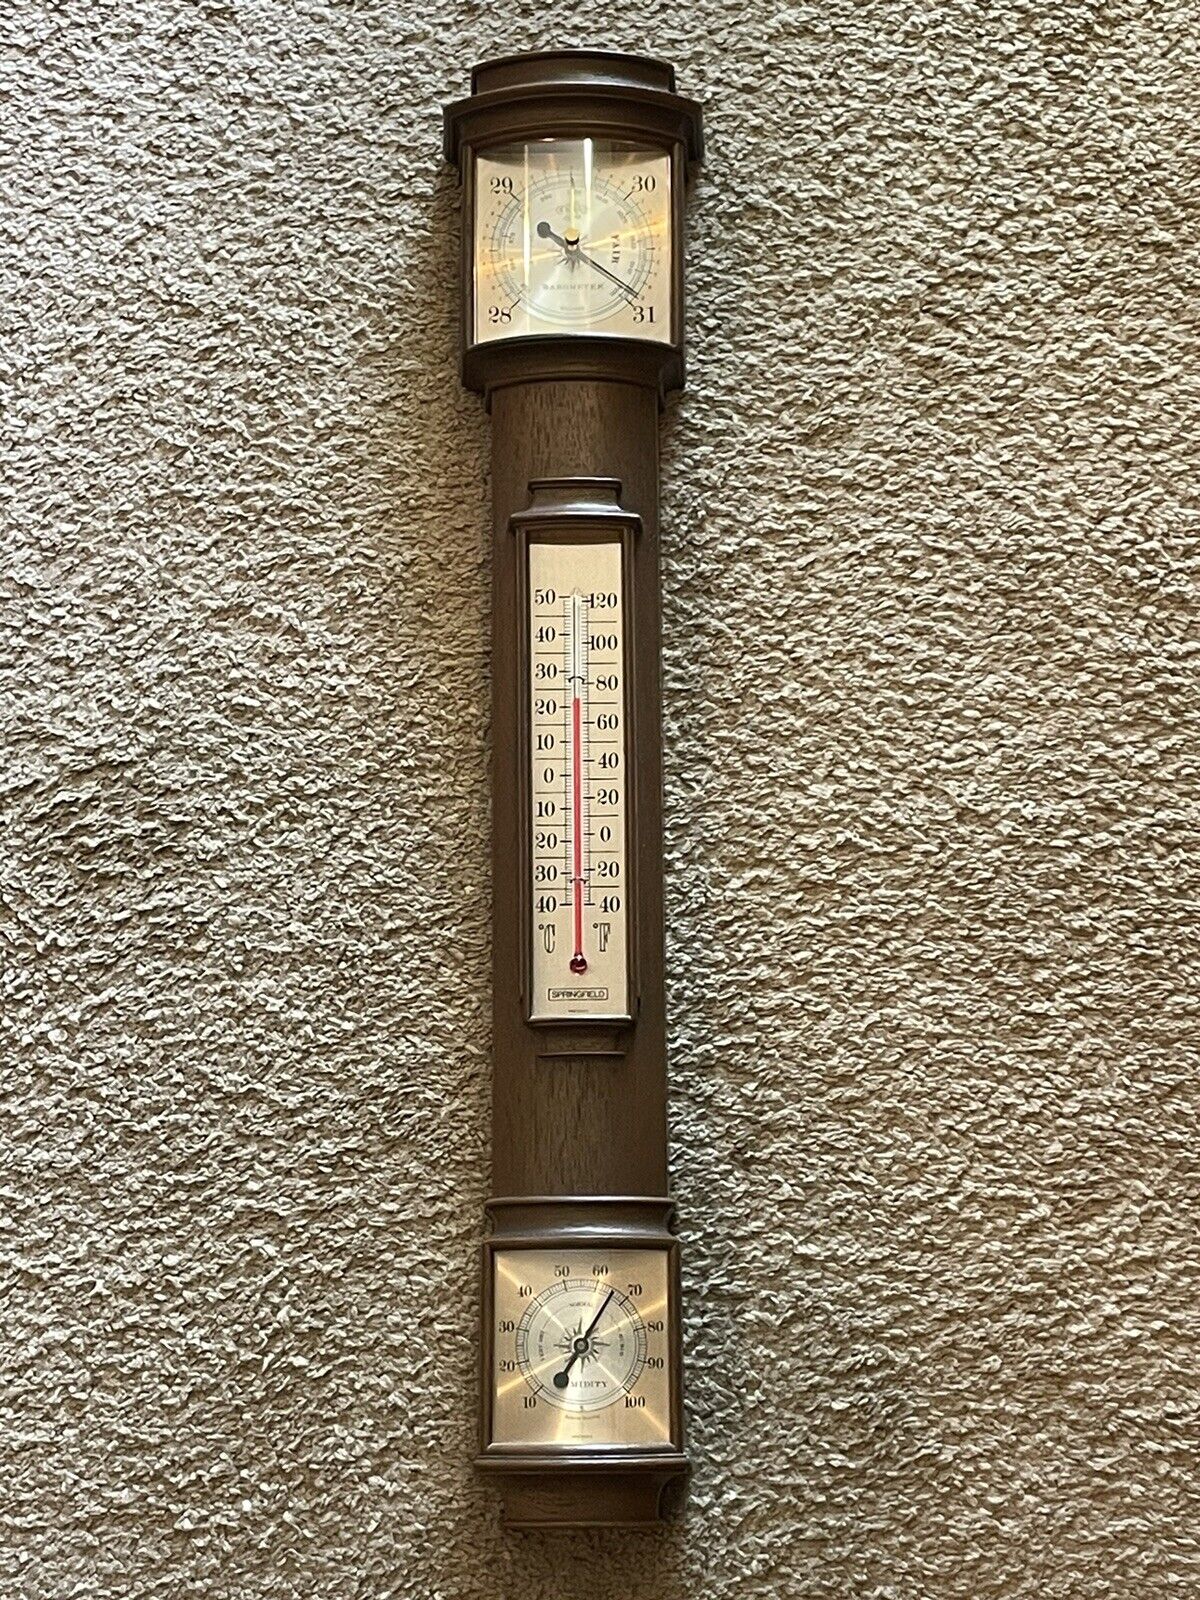 Vintage Radio Springfield Wall Mount Weather Station Barometer Temp Humidity